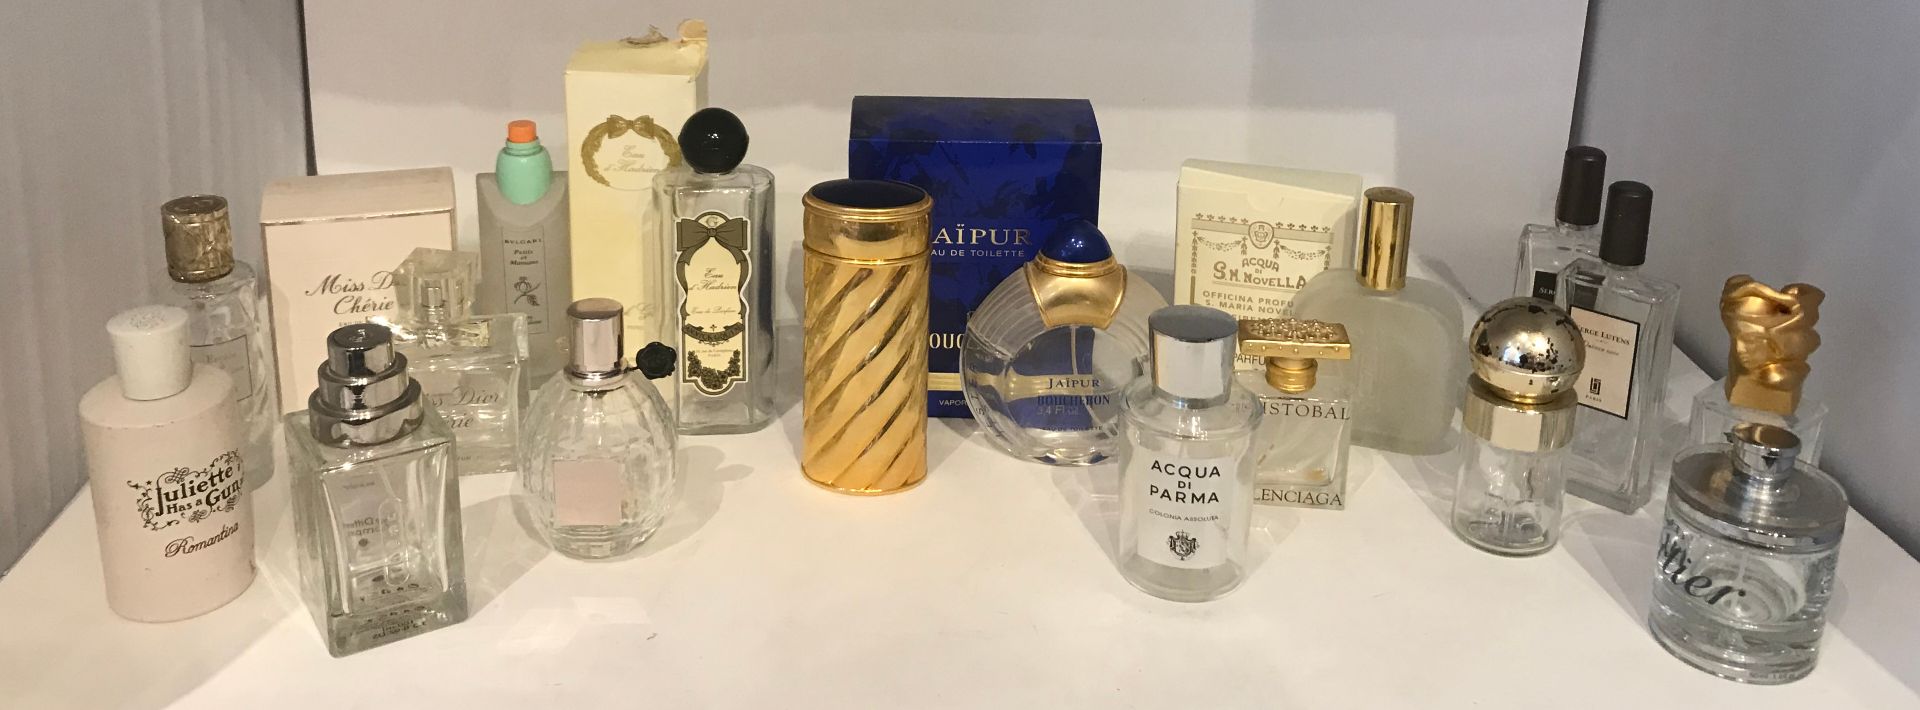 Null Batch of bottles of perfume and eau de toilette

Boucheron, Dior, Annick Go&hellip;